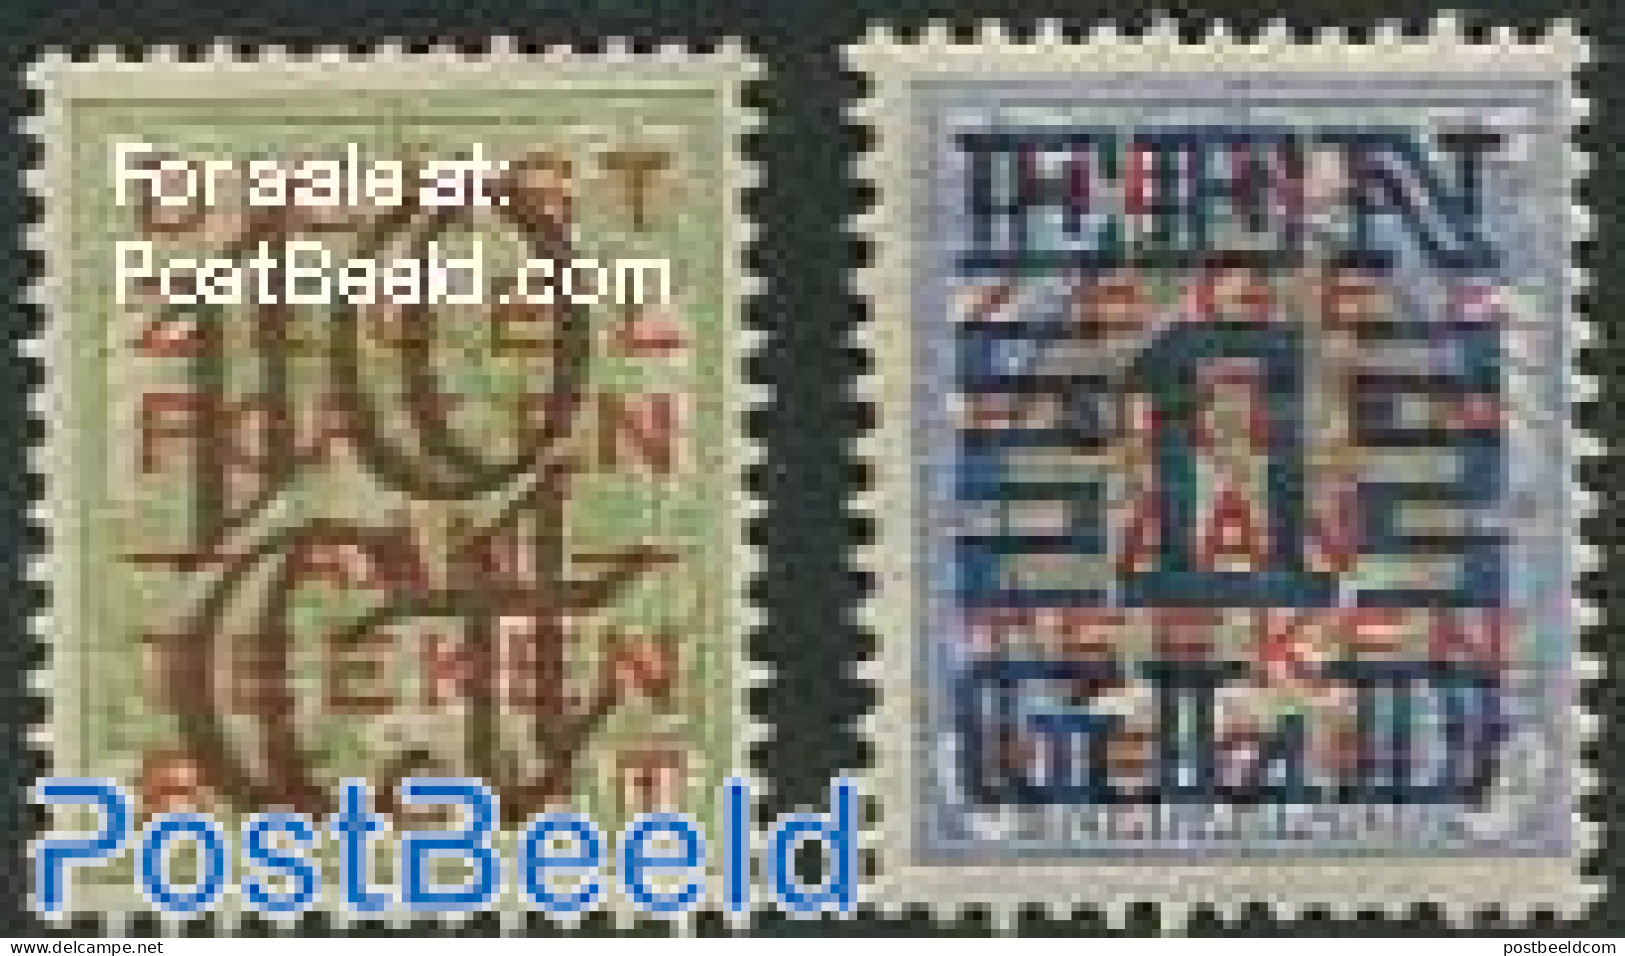 Netherlands 1923 Overprints 2v, Unused (hinged) - Unused Stamps